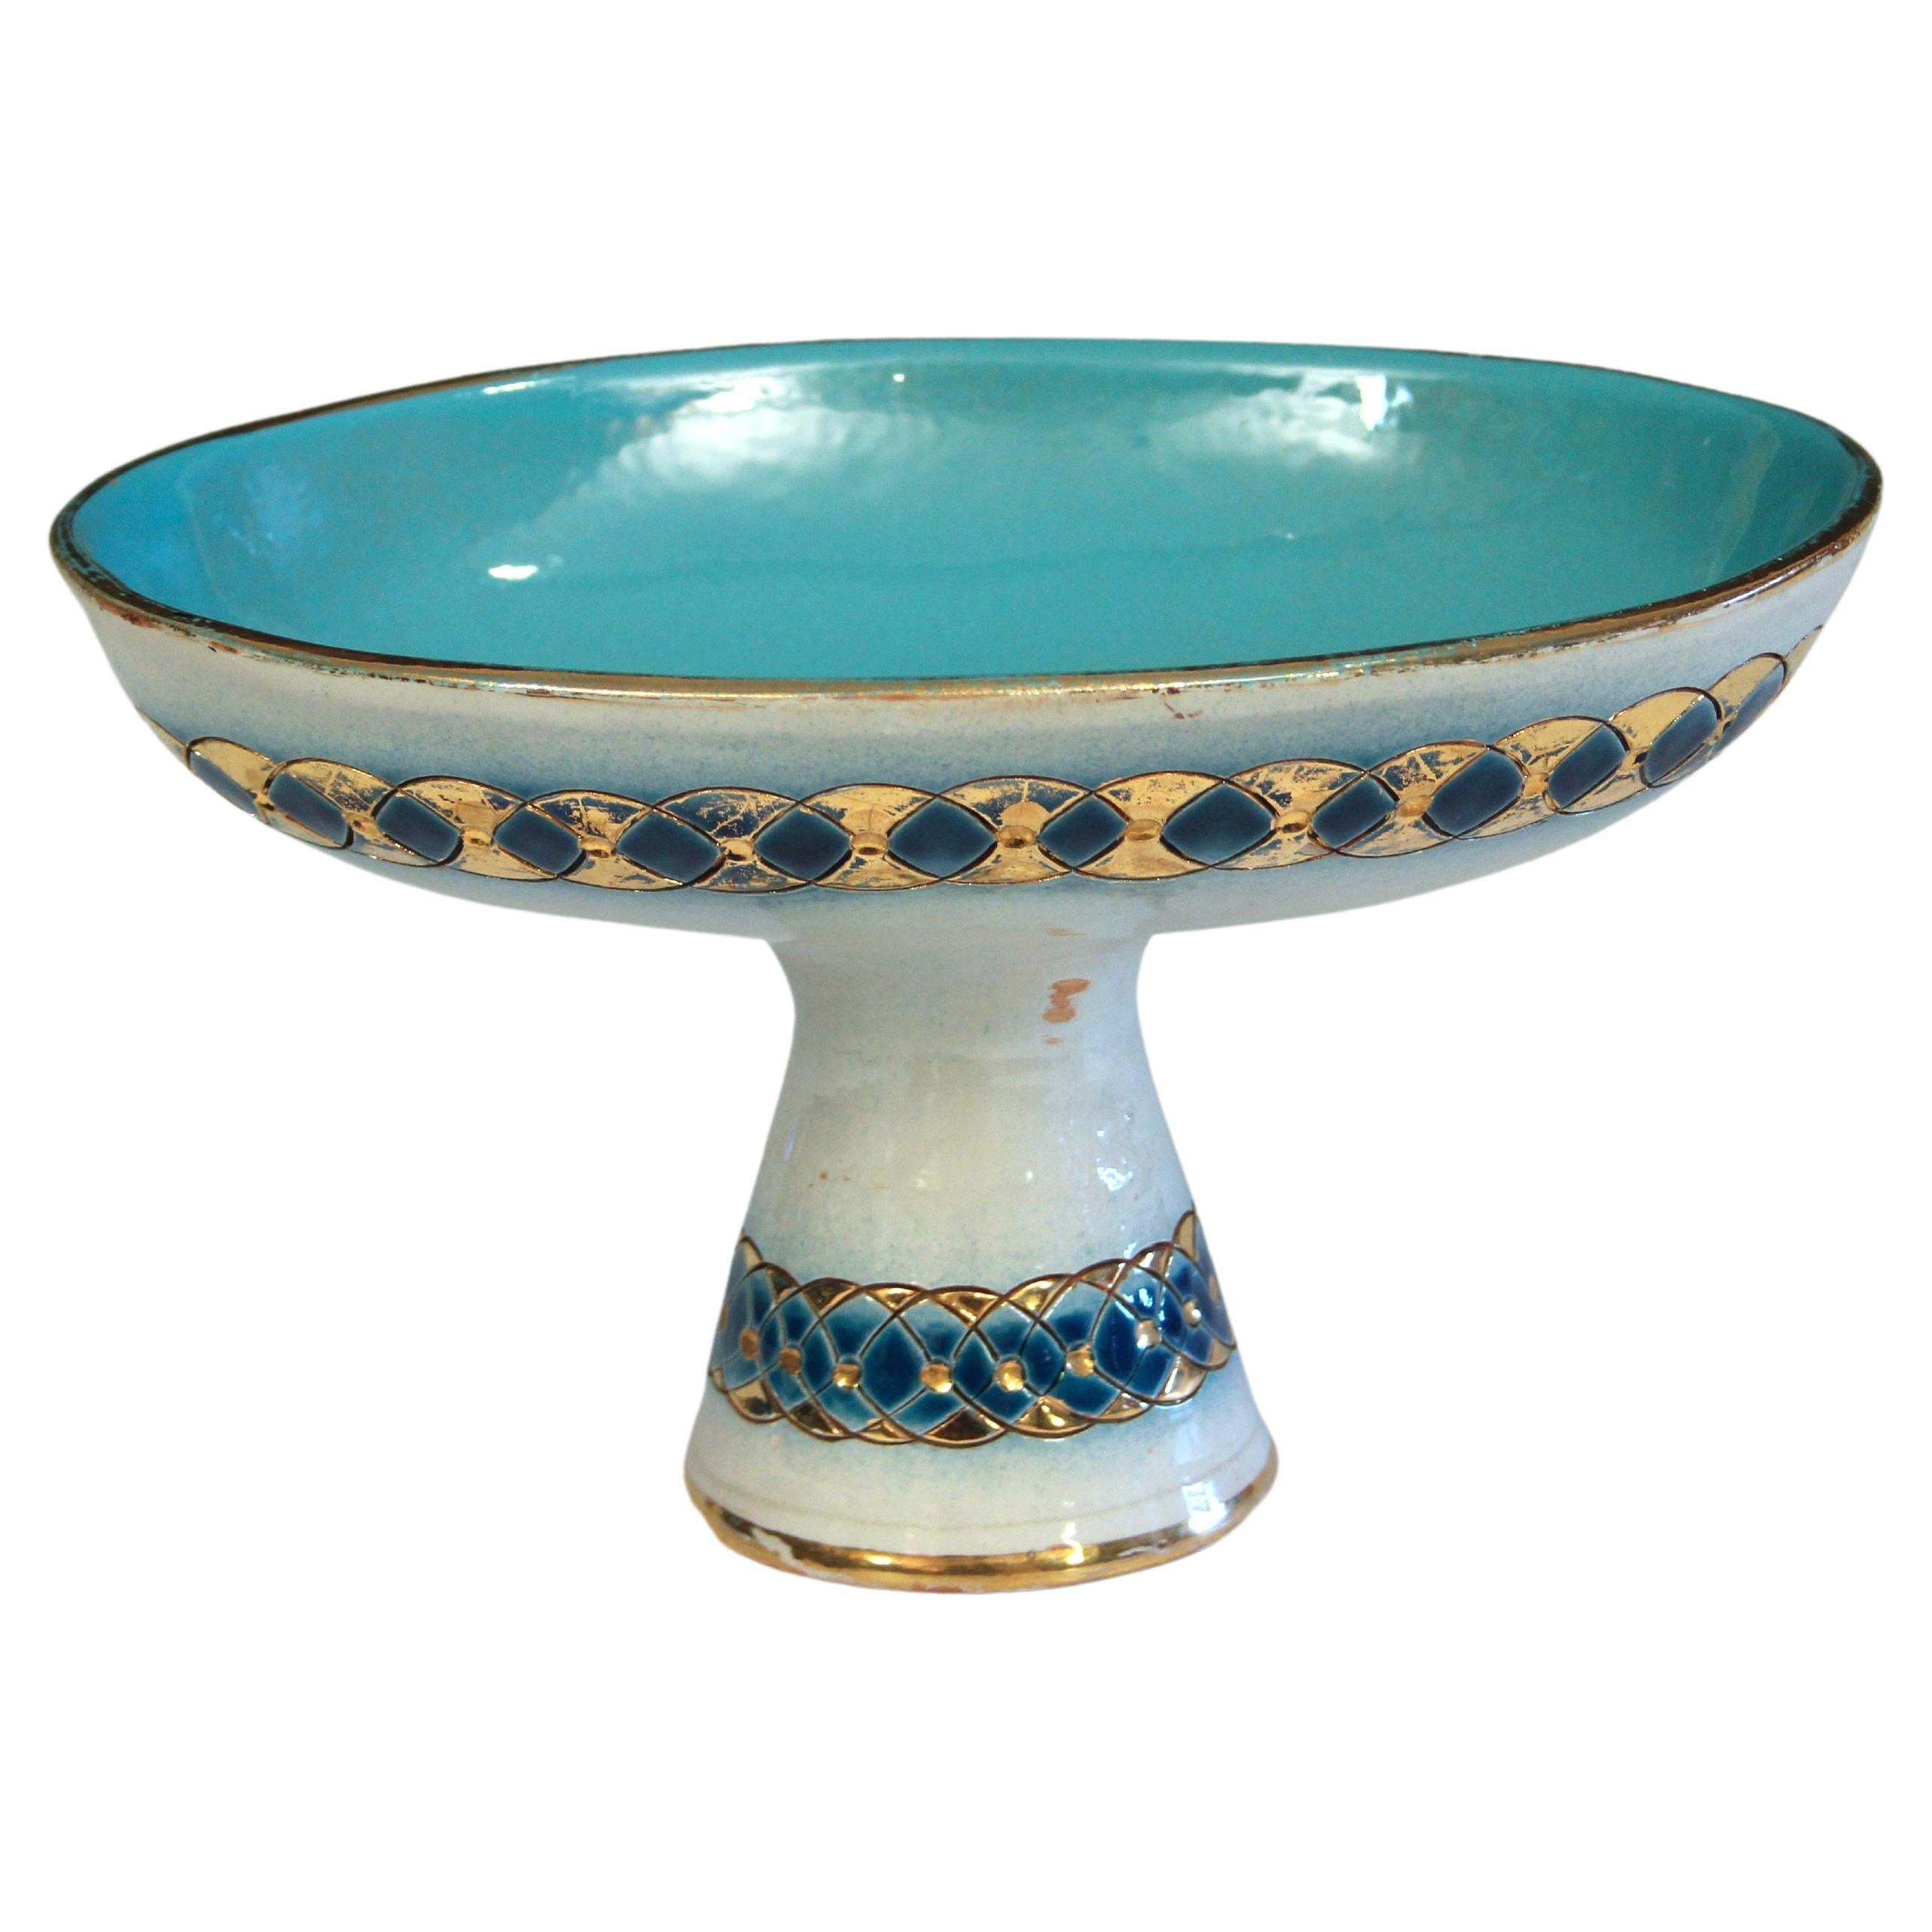 Bitossi Londi Raymor Mid Century Italian Pottery Compote Bowl